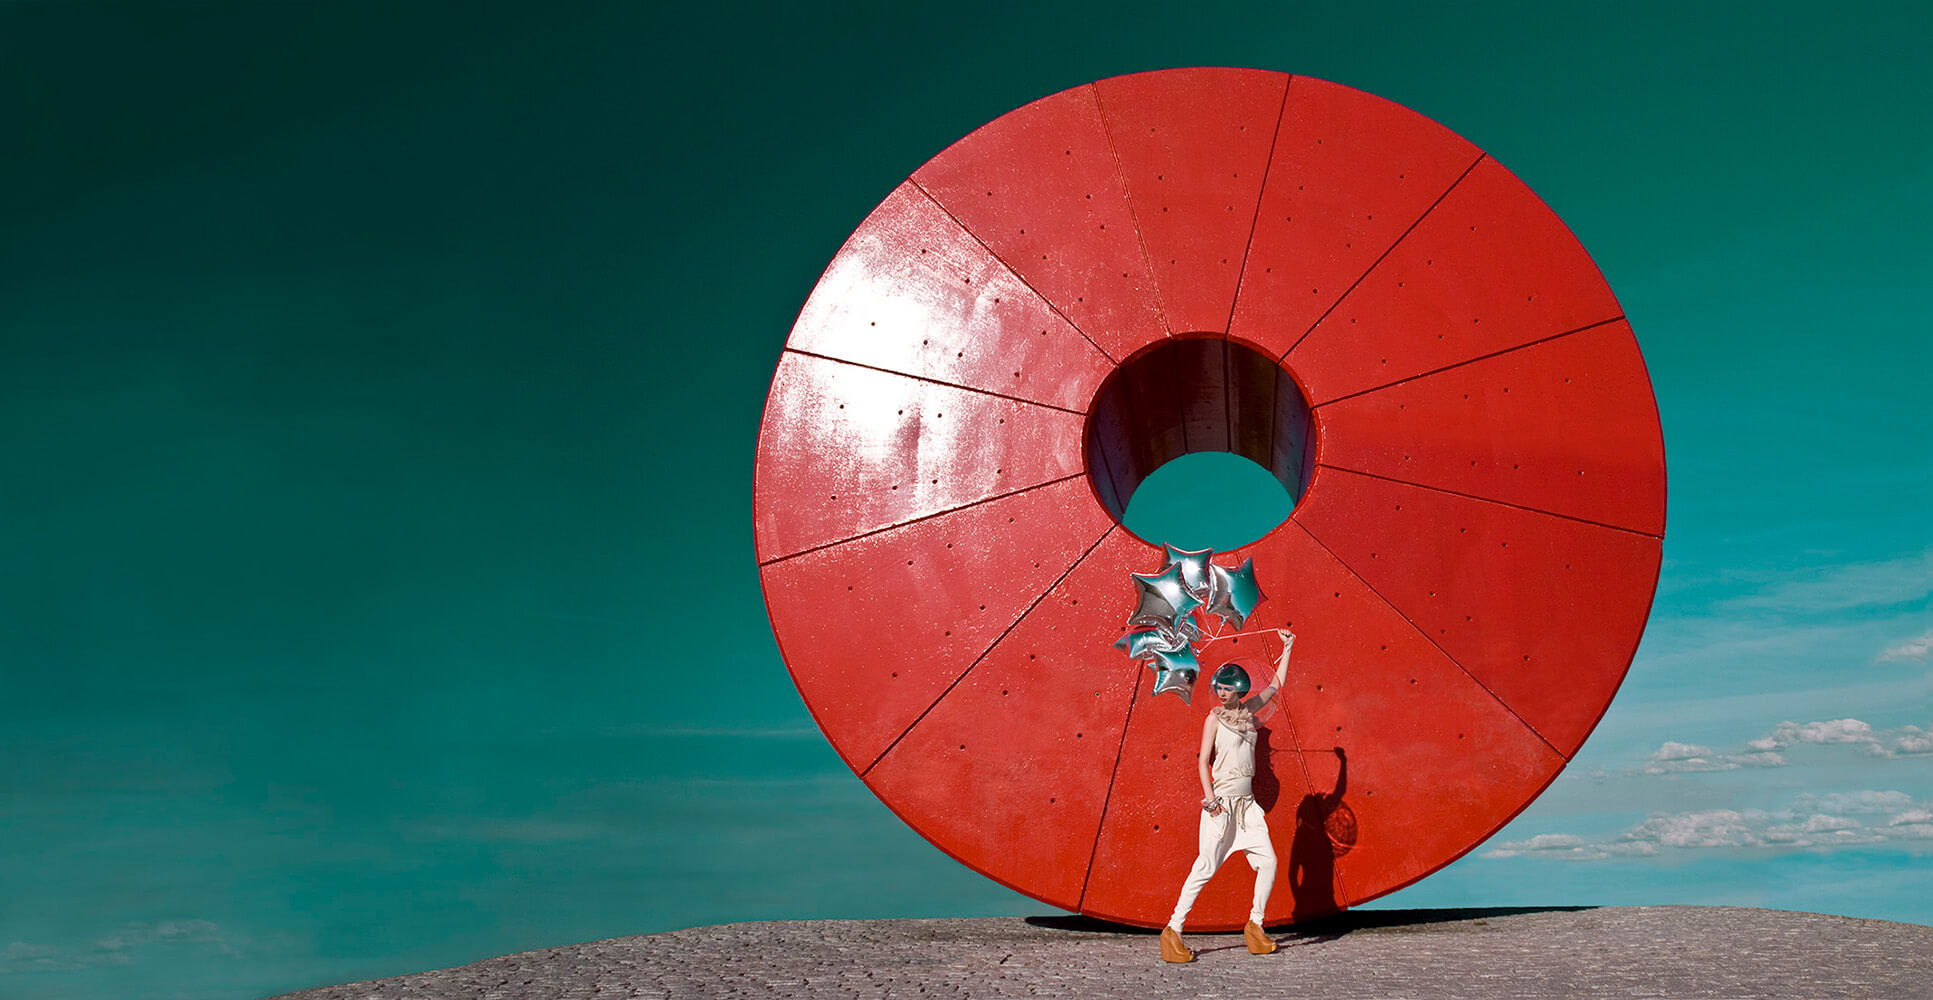 Angel-Ruiz-Ruiz-Fashion-Photographer-Campaign-SS-2013-Divina-Providencia-Madrid-Futurist-Nude-Top-Pants-Balloon-1499x1000